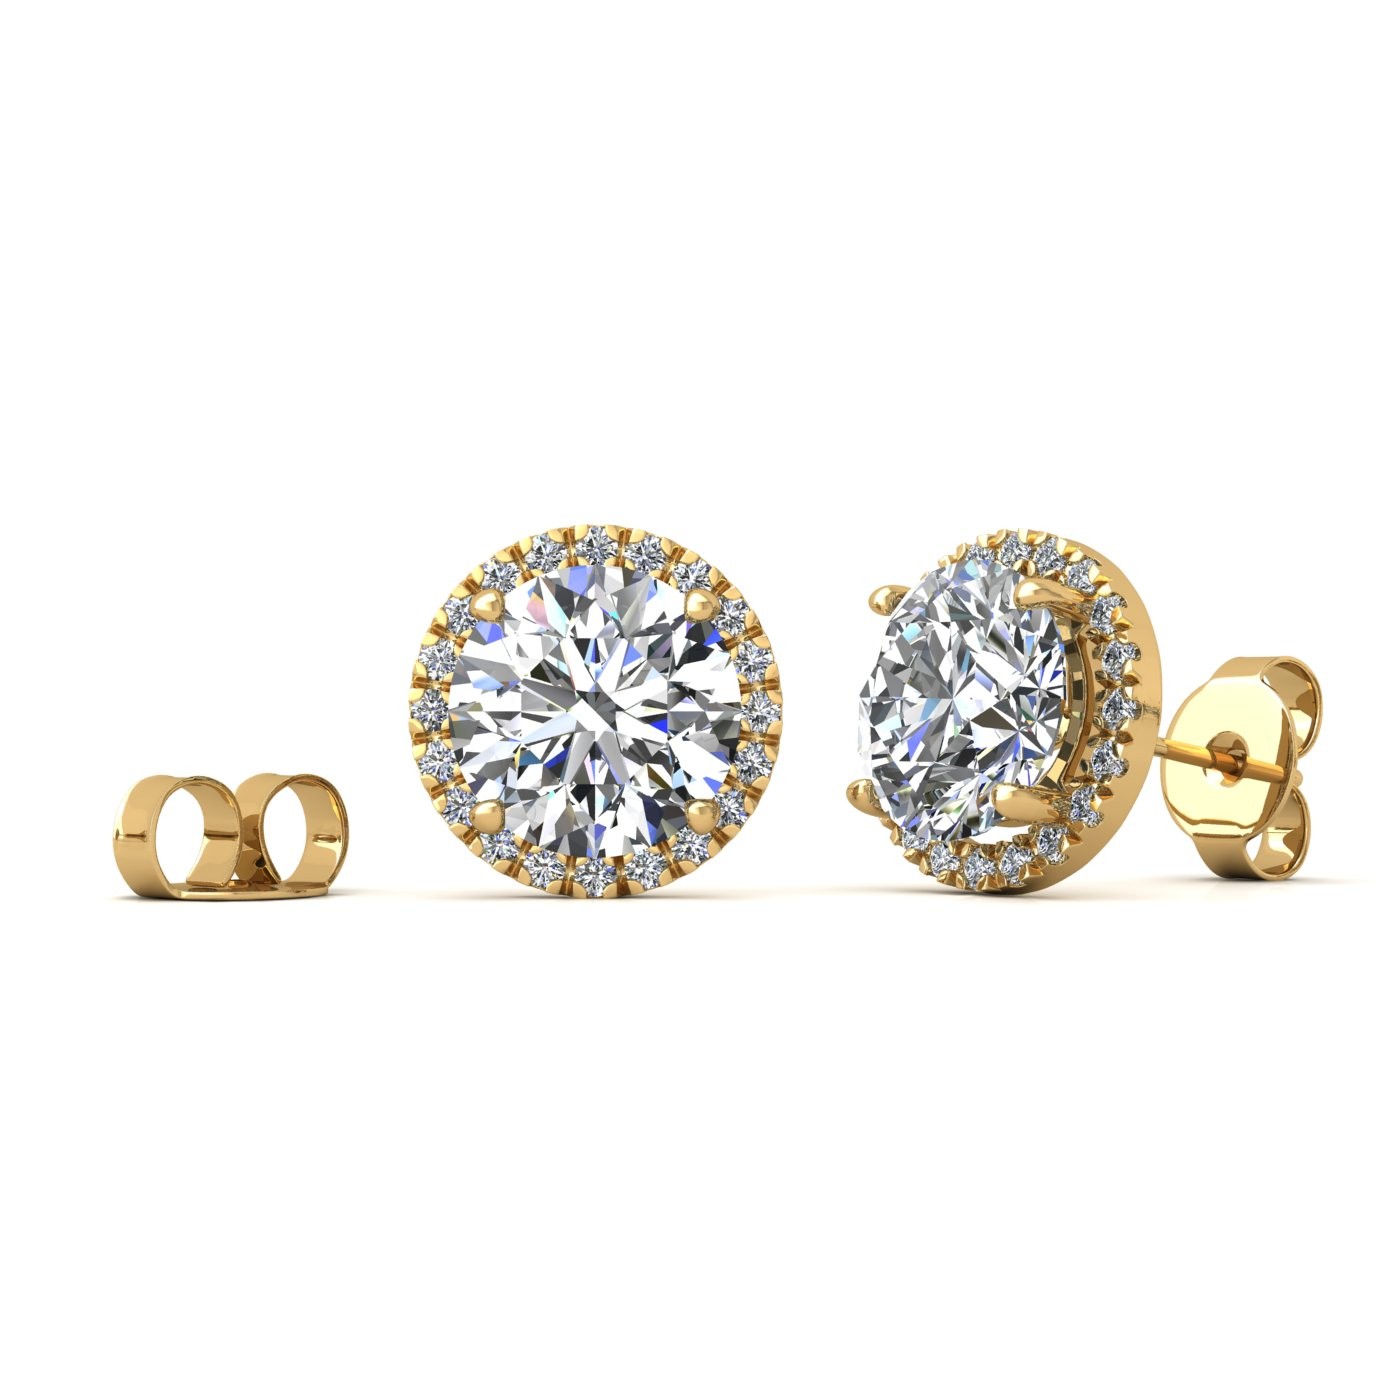 18k yellow gold  0,7 ct each (1,4 tcw) 4 prongs round shape diamond earrings with diamond pavÉ set halo Photos & images